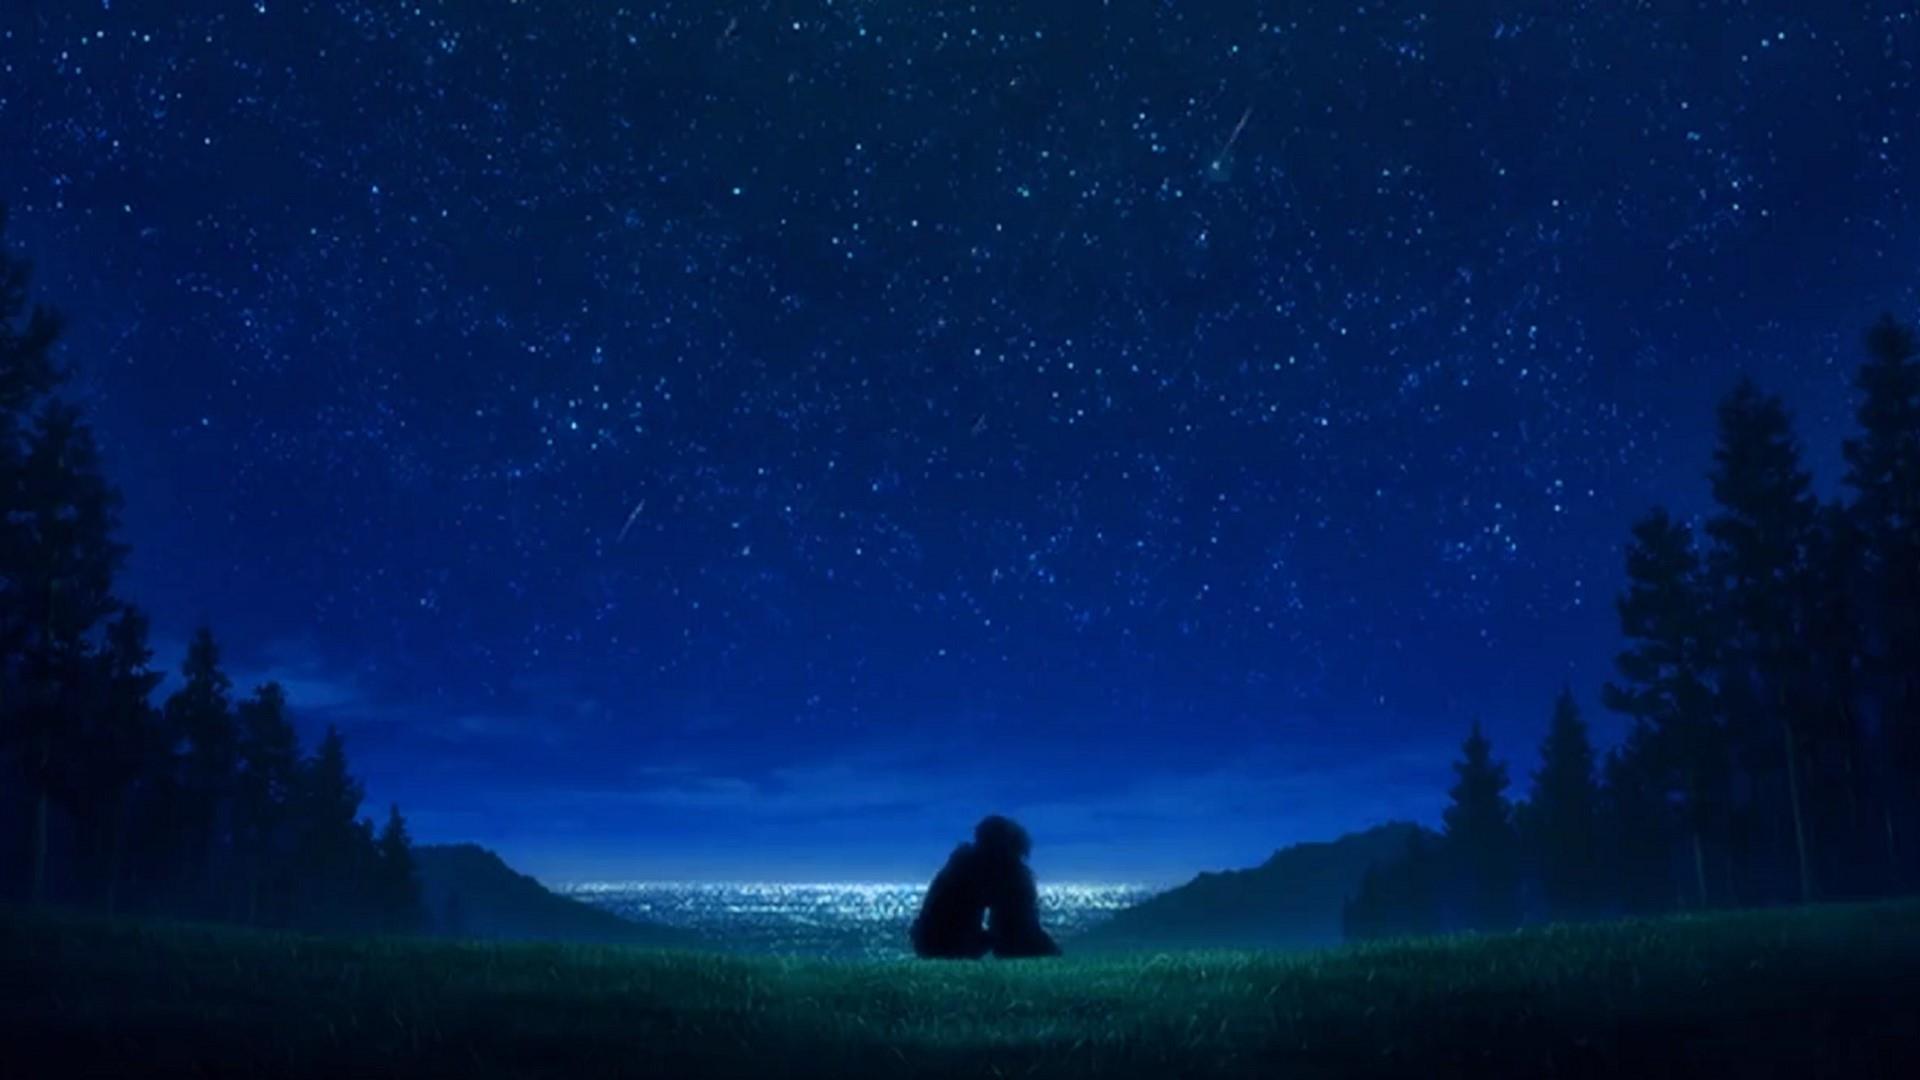 Anime Backgrounds Night / Anime Night Sky Wallpapers Top Free Anime